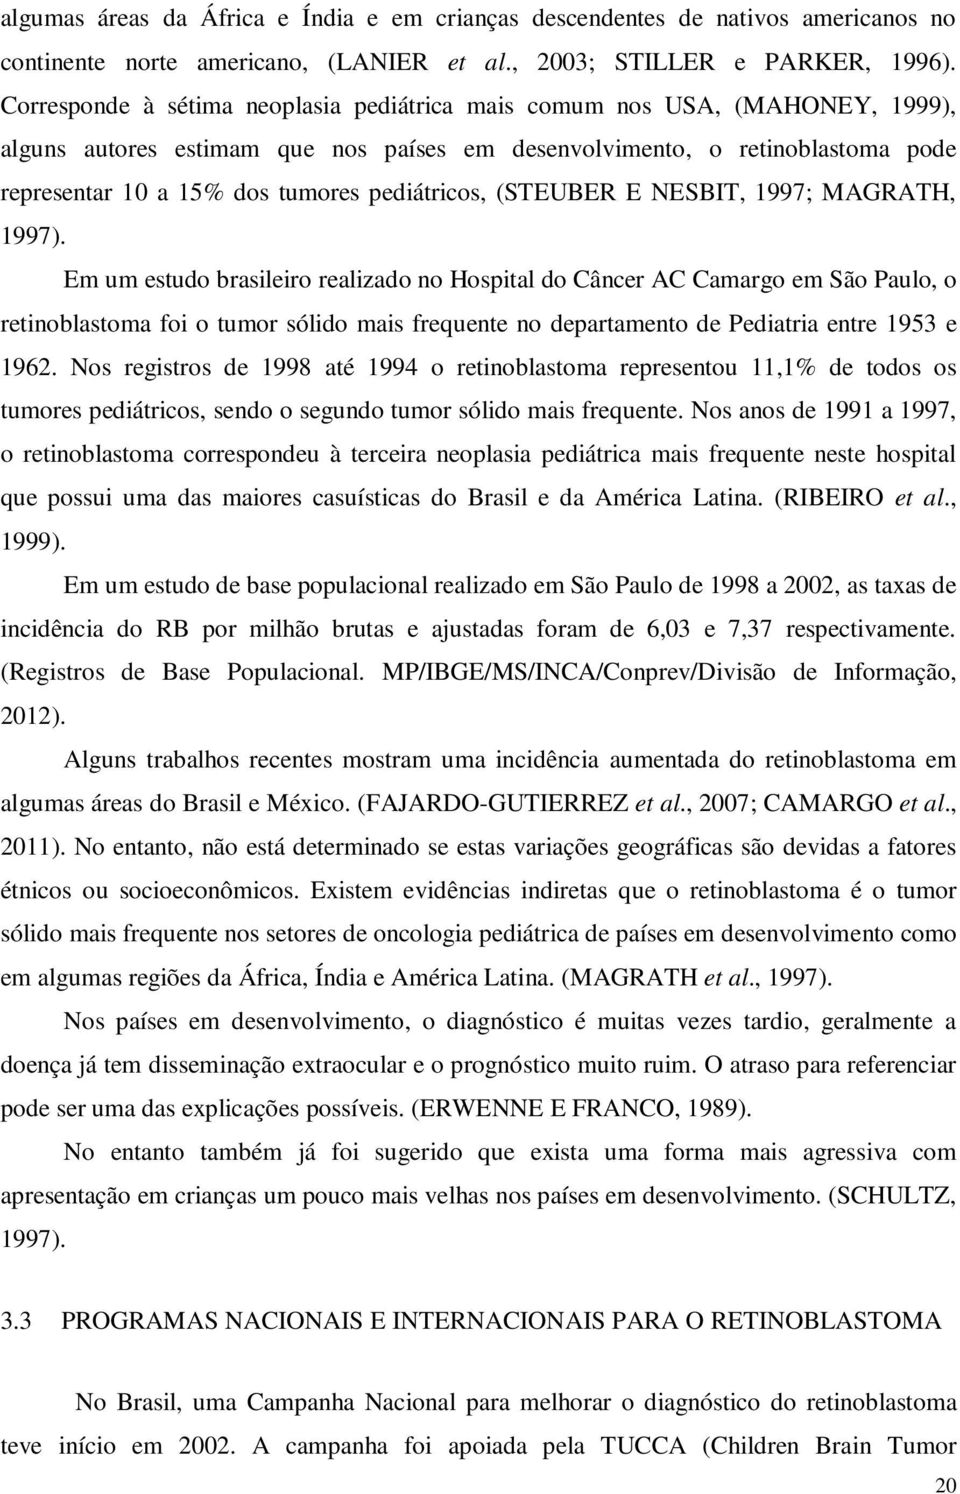 pediátricos, (STEUBER E NESBIT, 1997; MAGRATH, 1997).